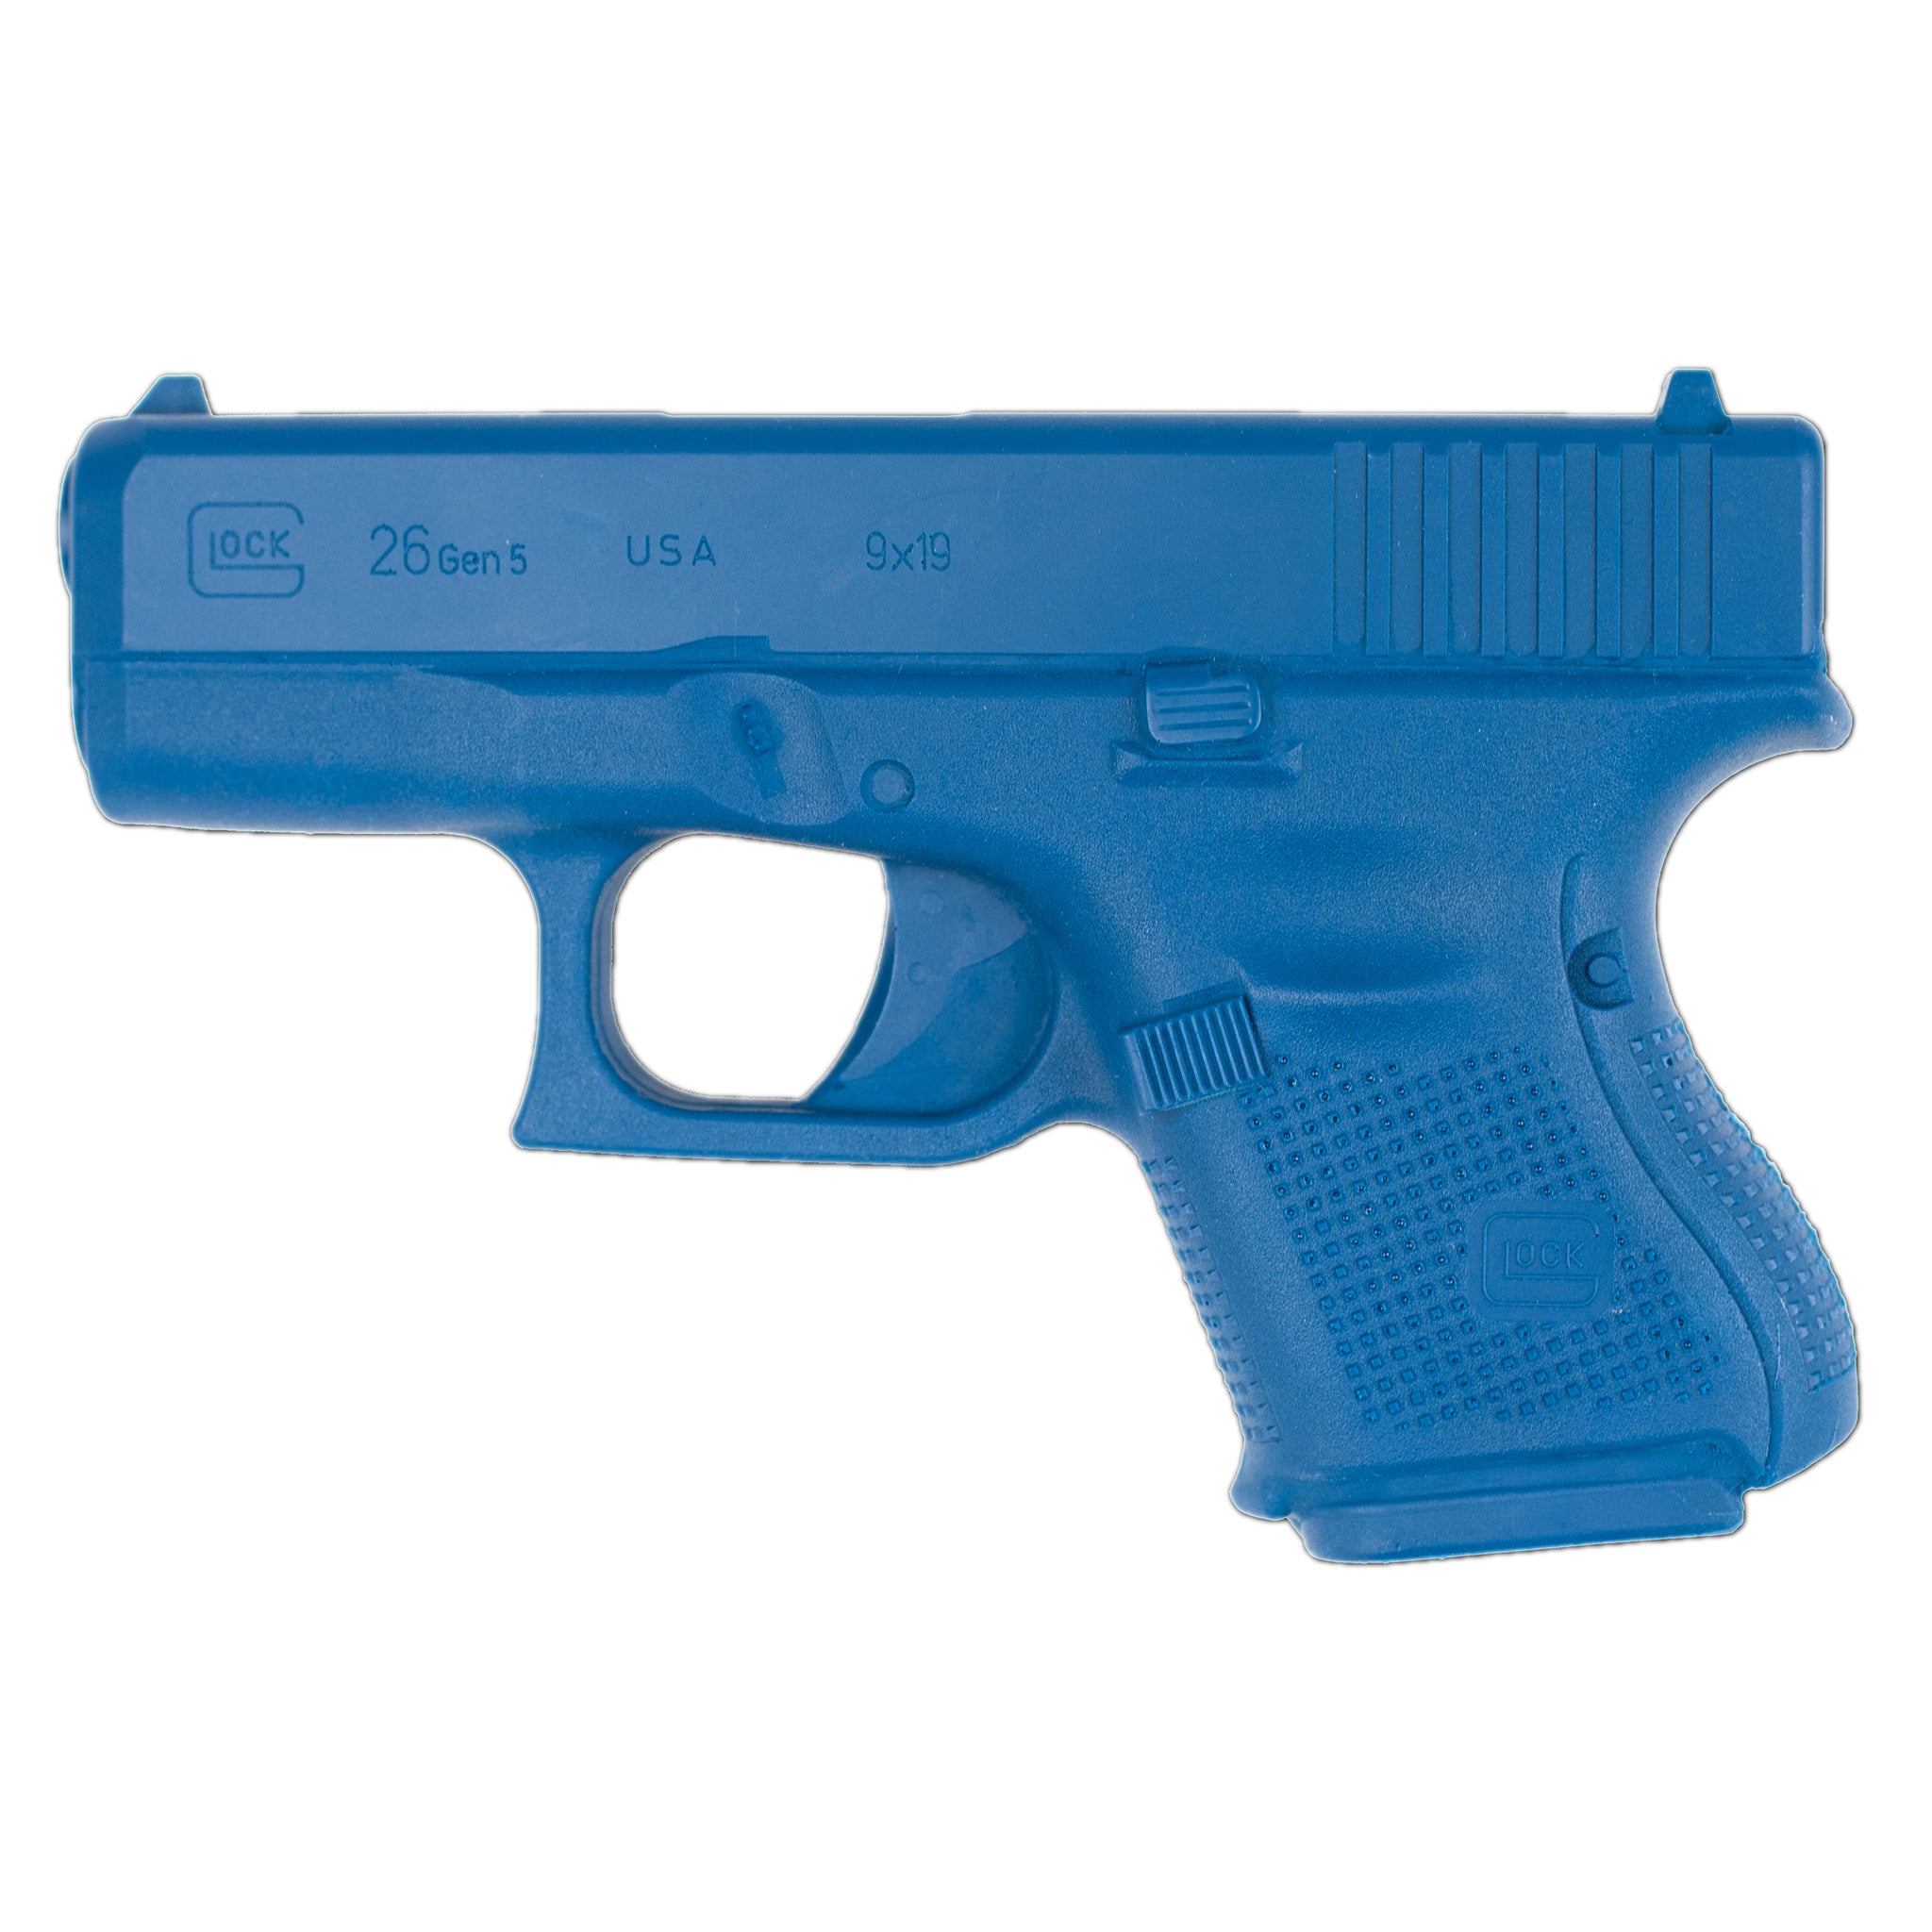 Blueguns Trainingswaffe Glock 26 GEN5